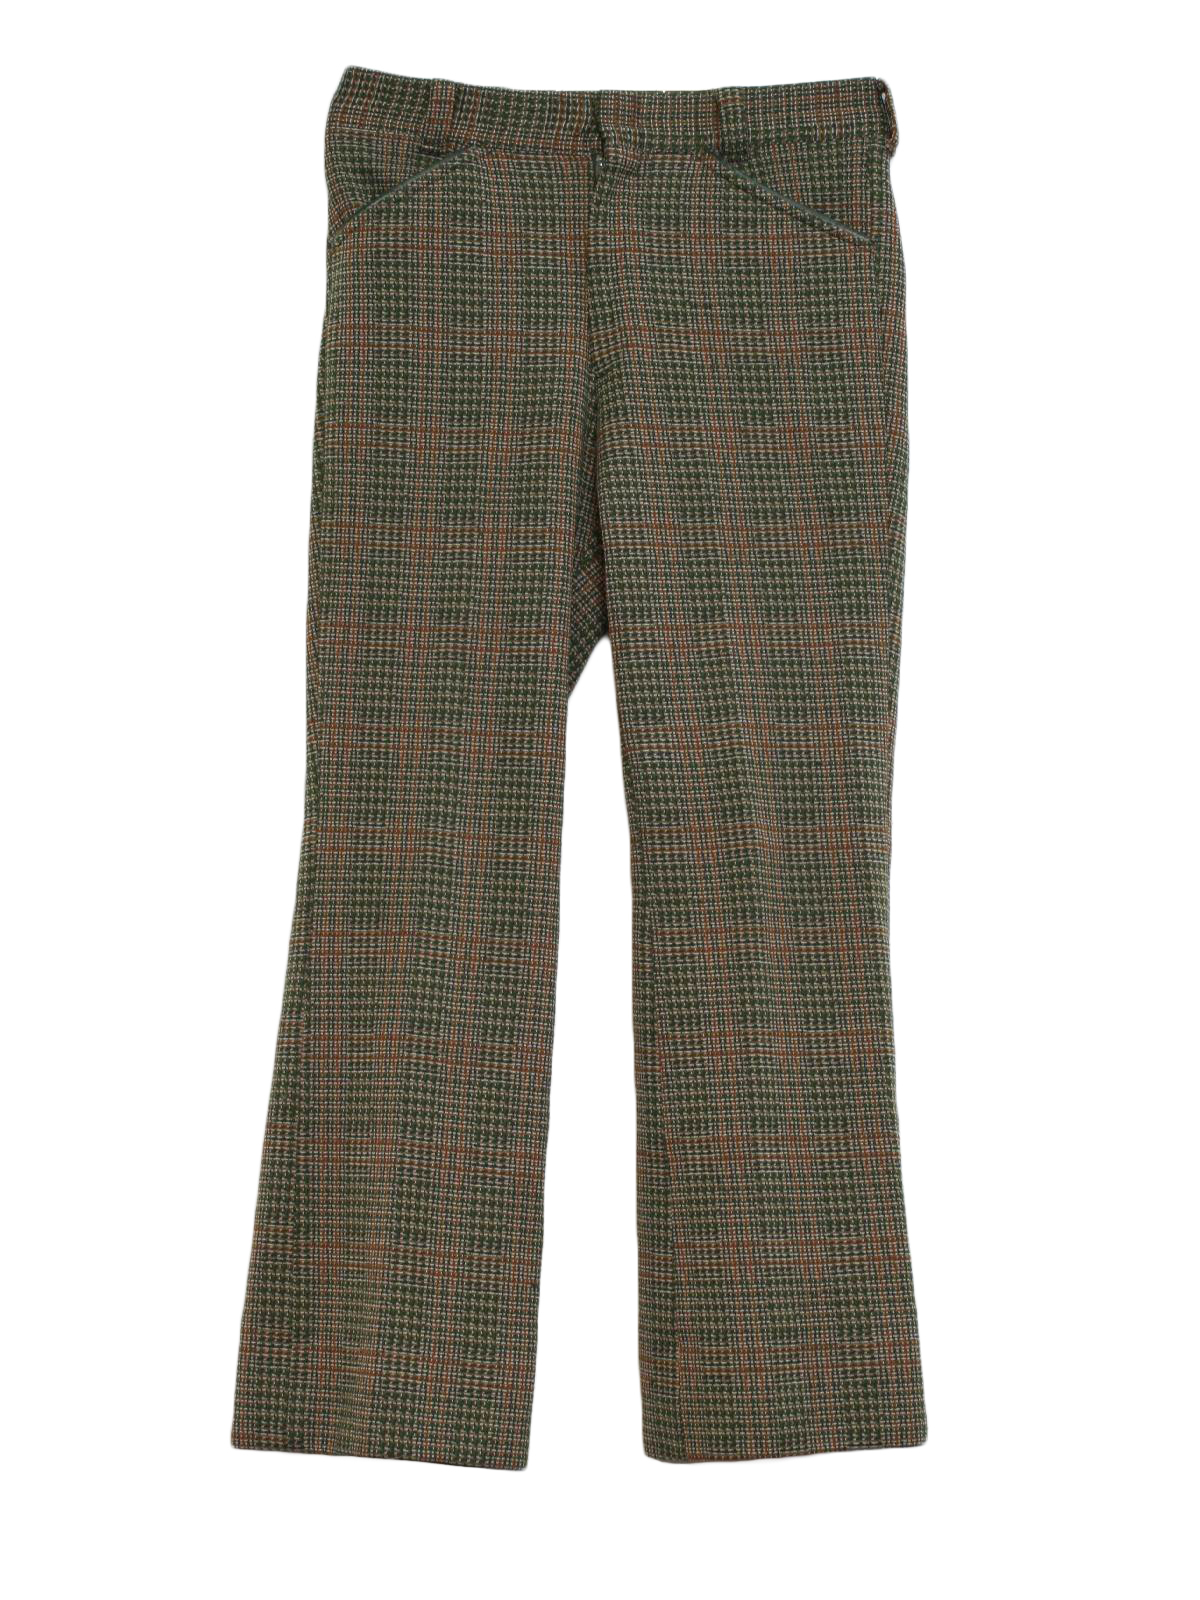 70's Vintage Flared Pants / Flares: 70s -Missing Label- Mens green, tan ...